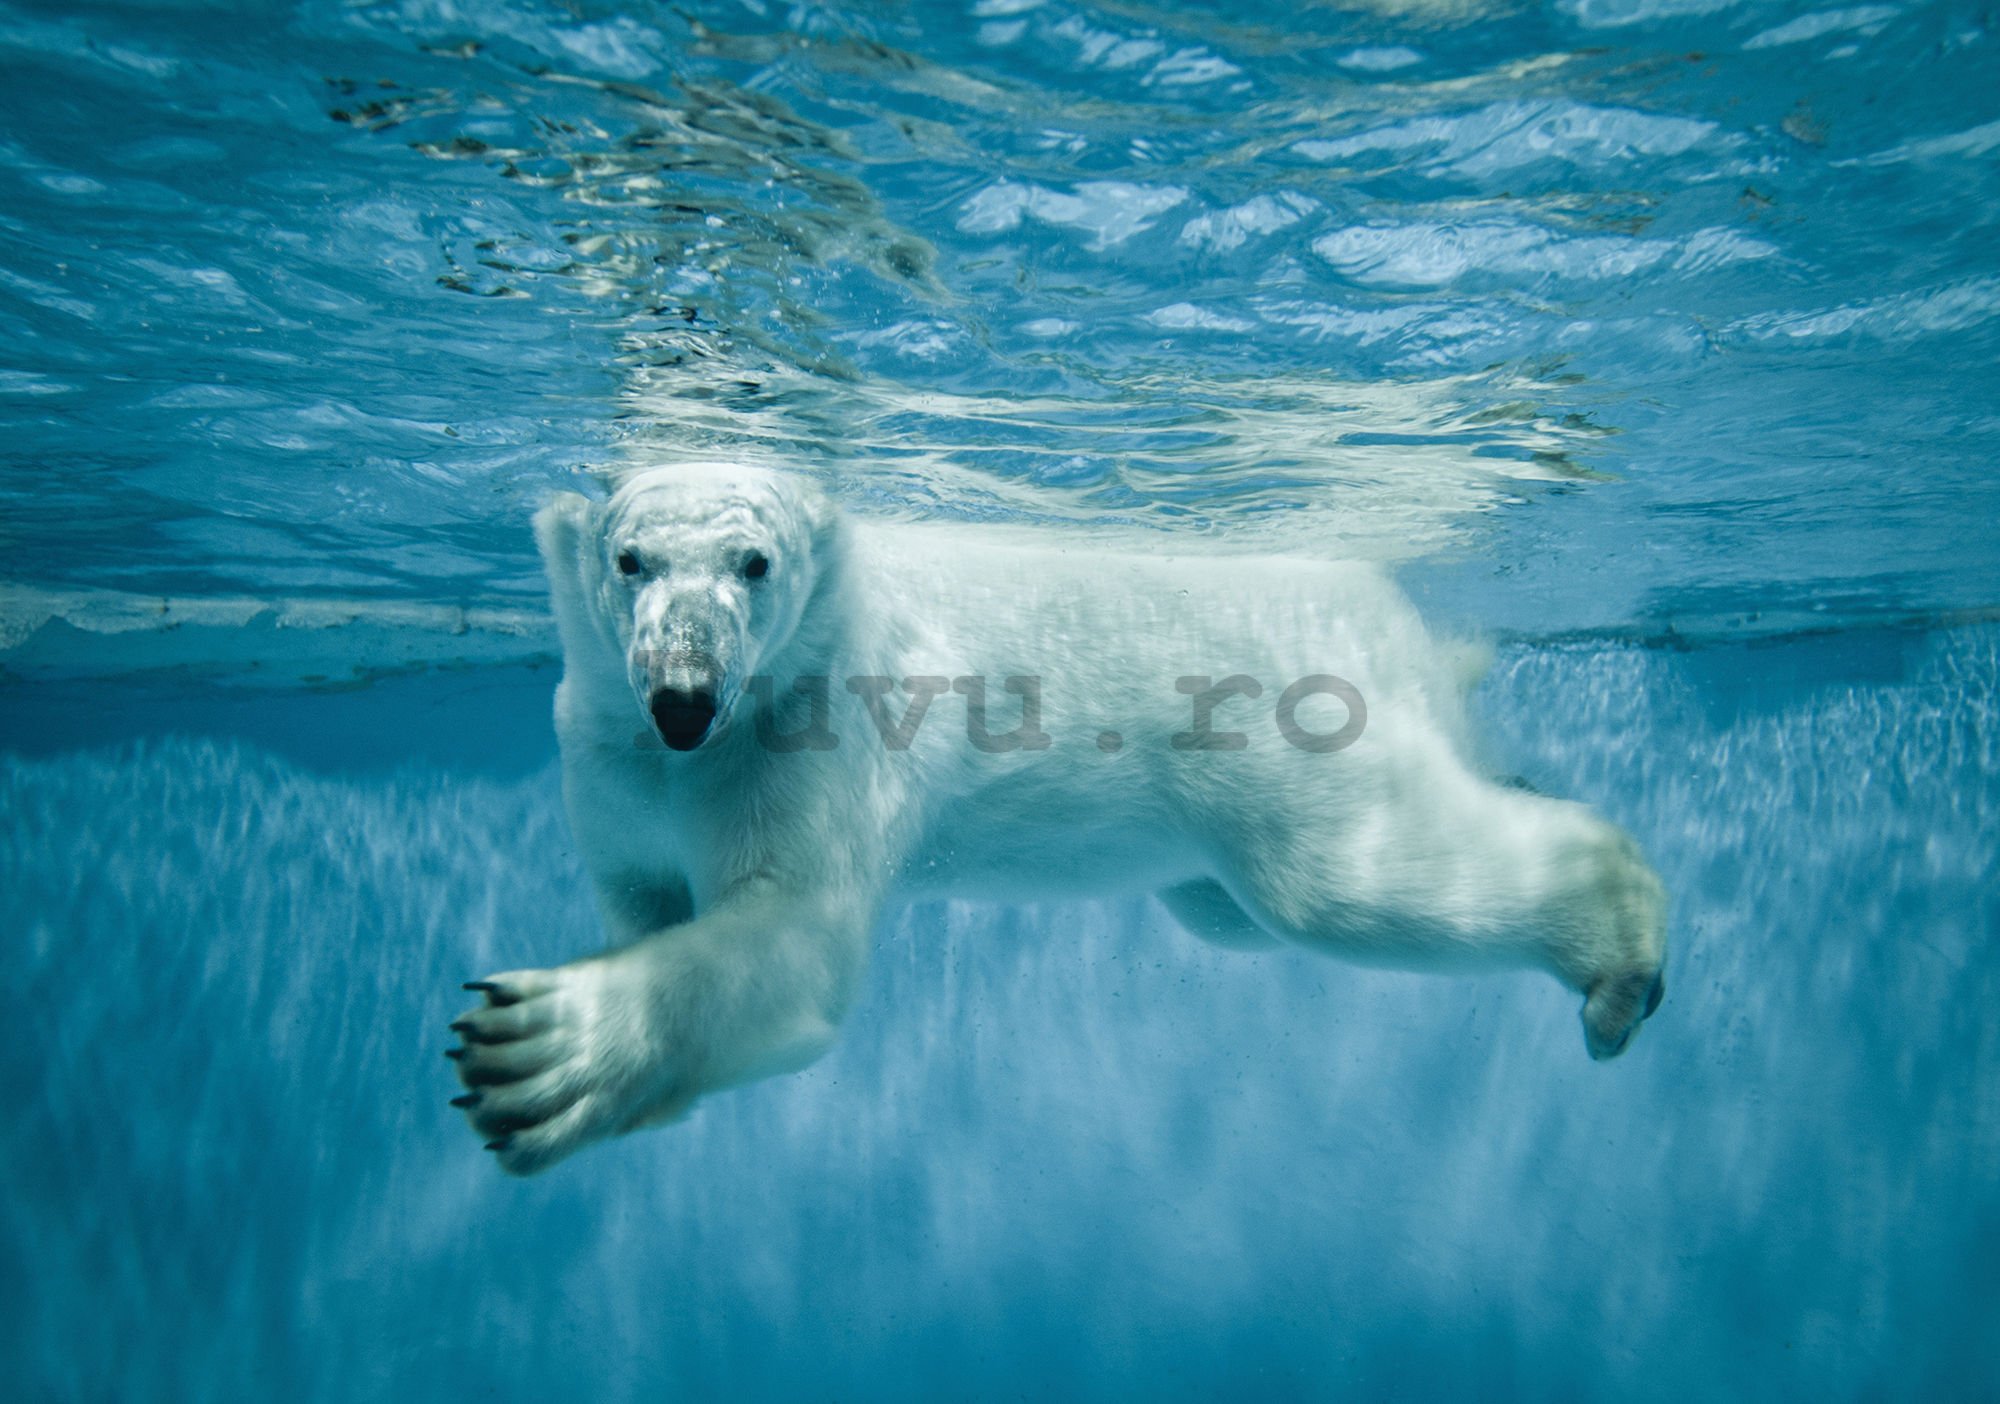 Fototapet: Polar Bear (1) - 254x368 cm